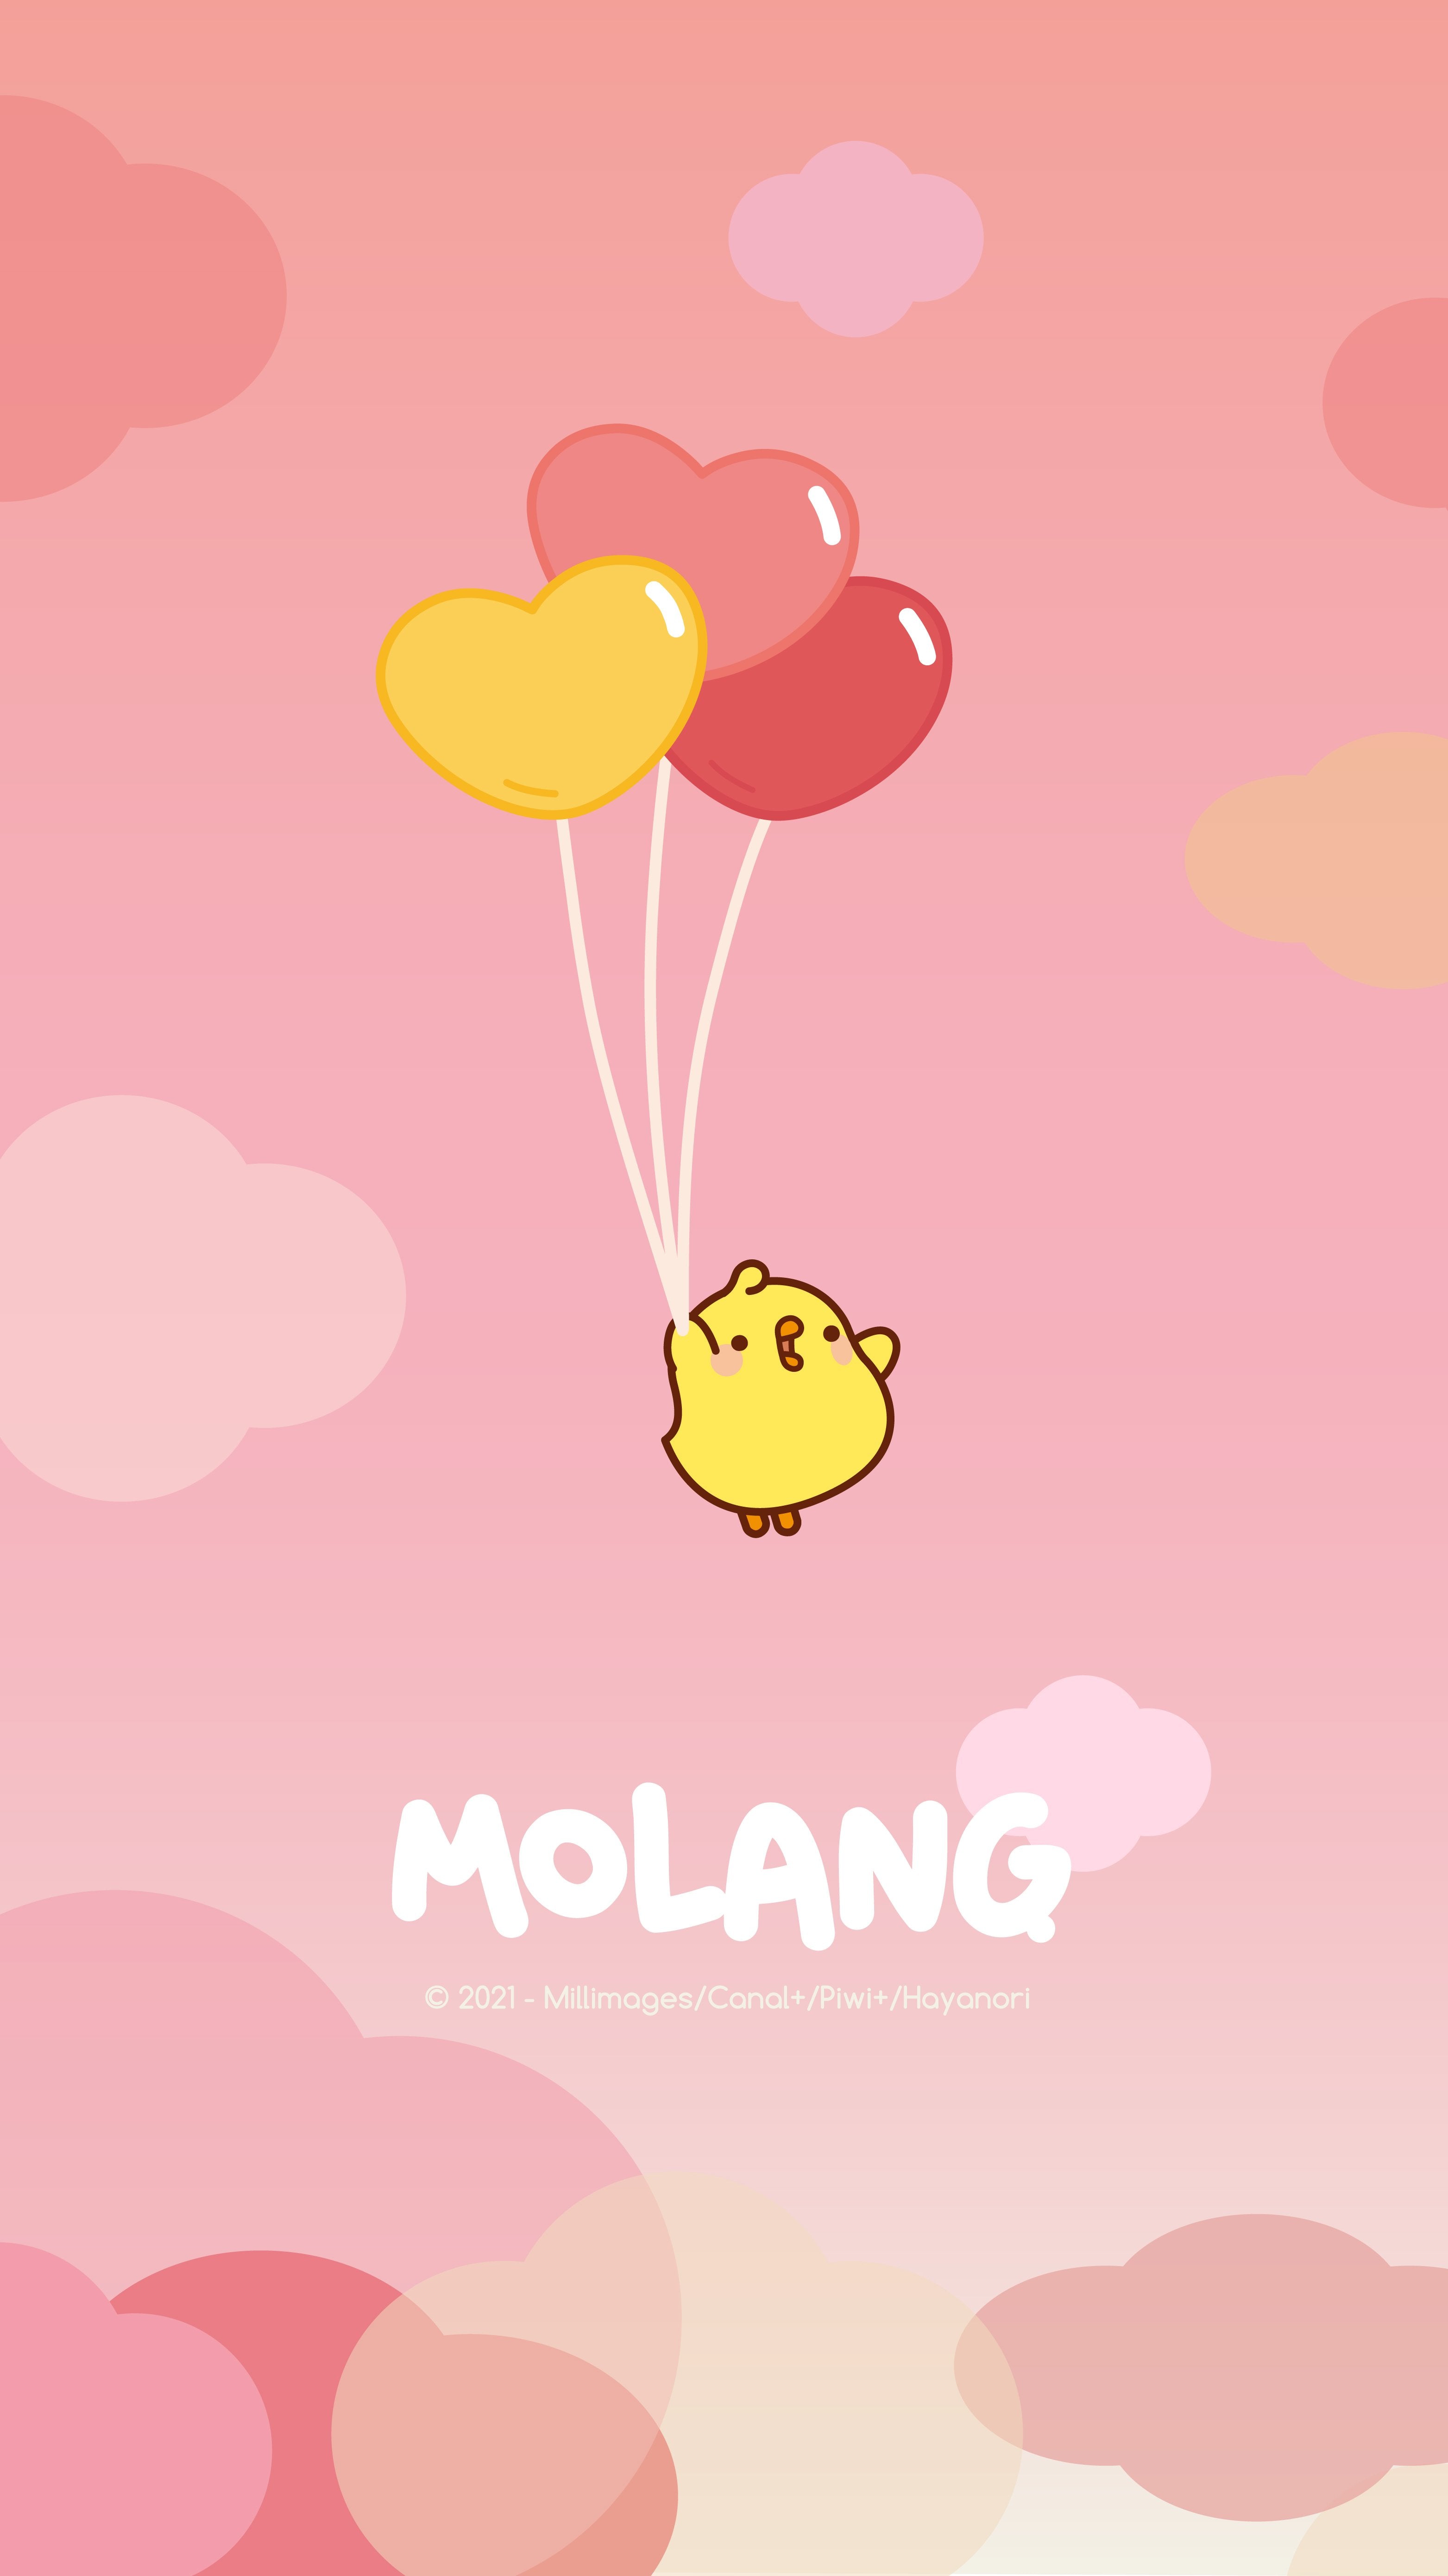 A cute cartoon bird flying with balloons - Molang